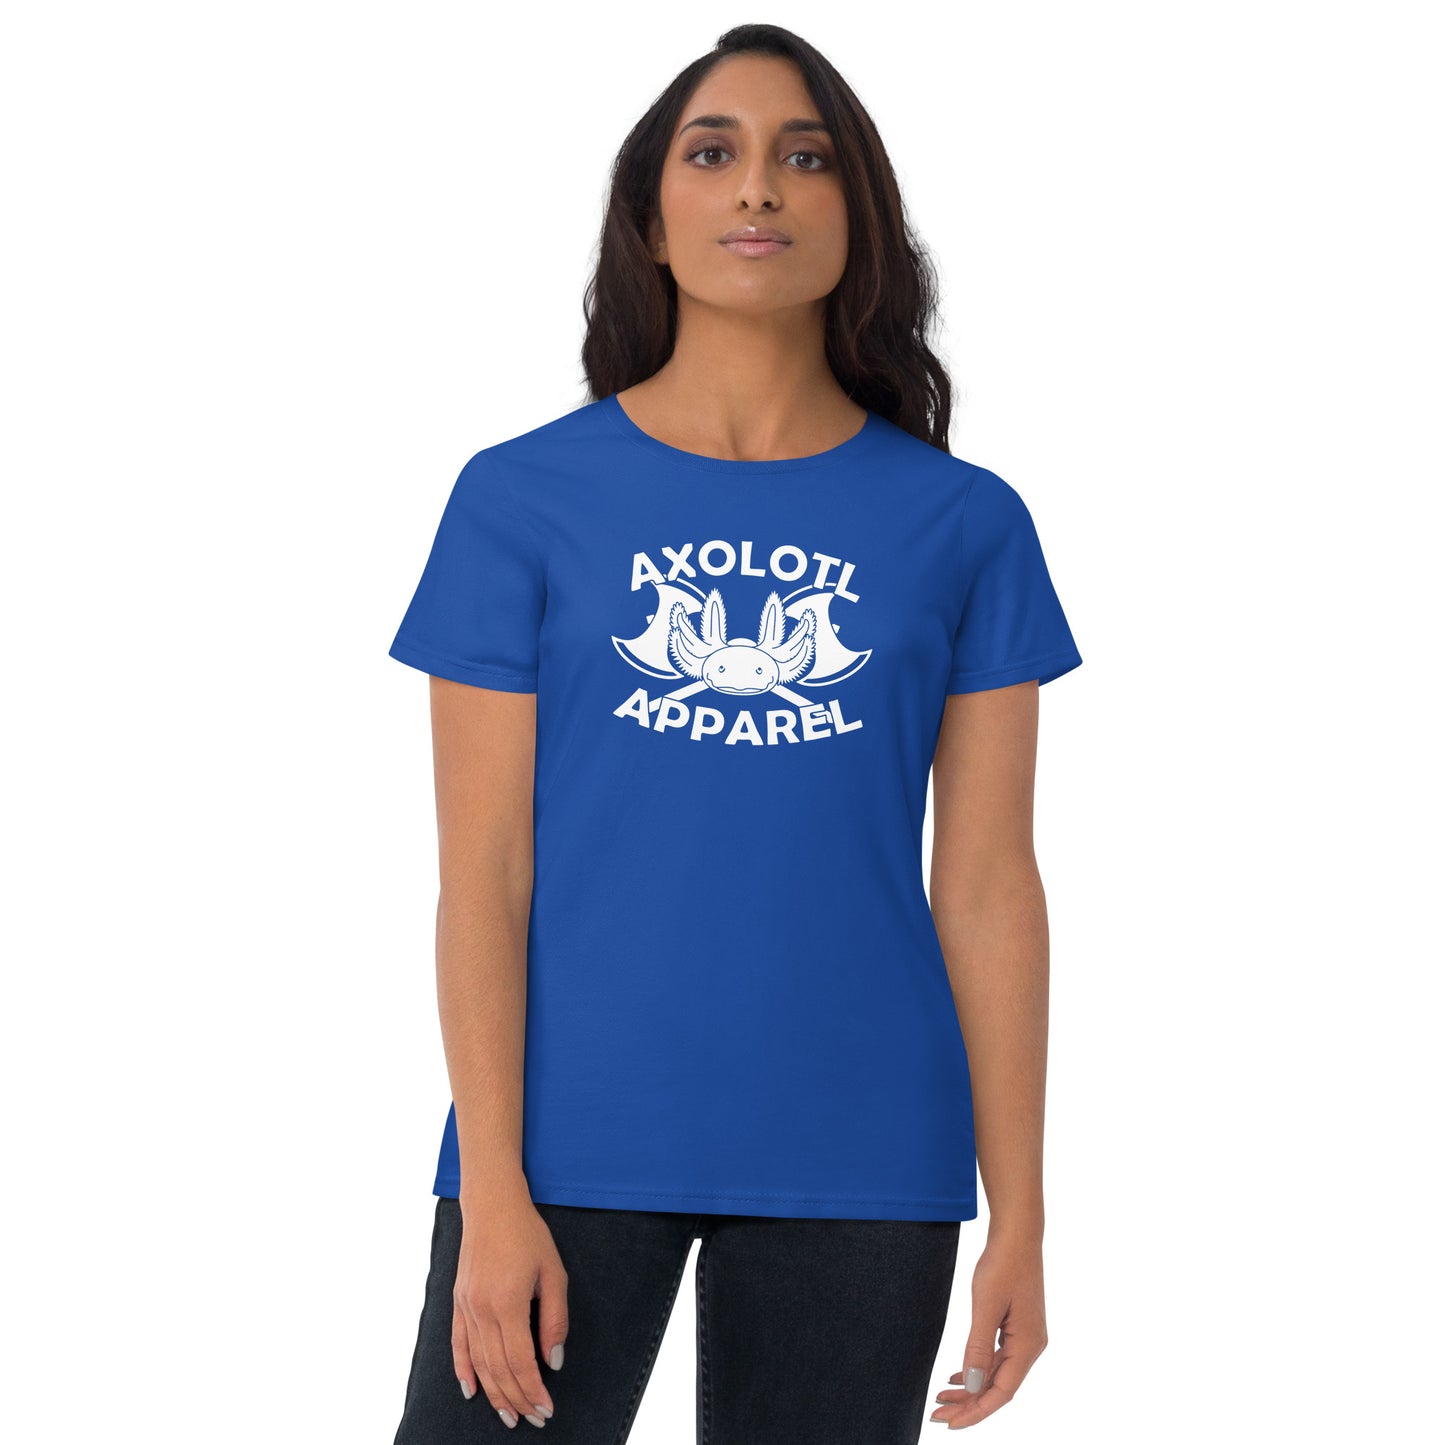 Axolotl-apparel-logo_Womens_Short-sleeve_T-shirt_Royal-blue_Mockup